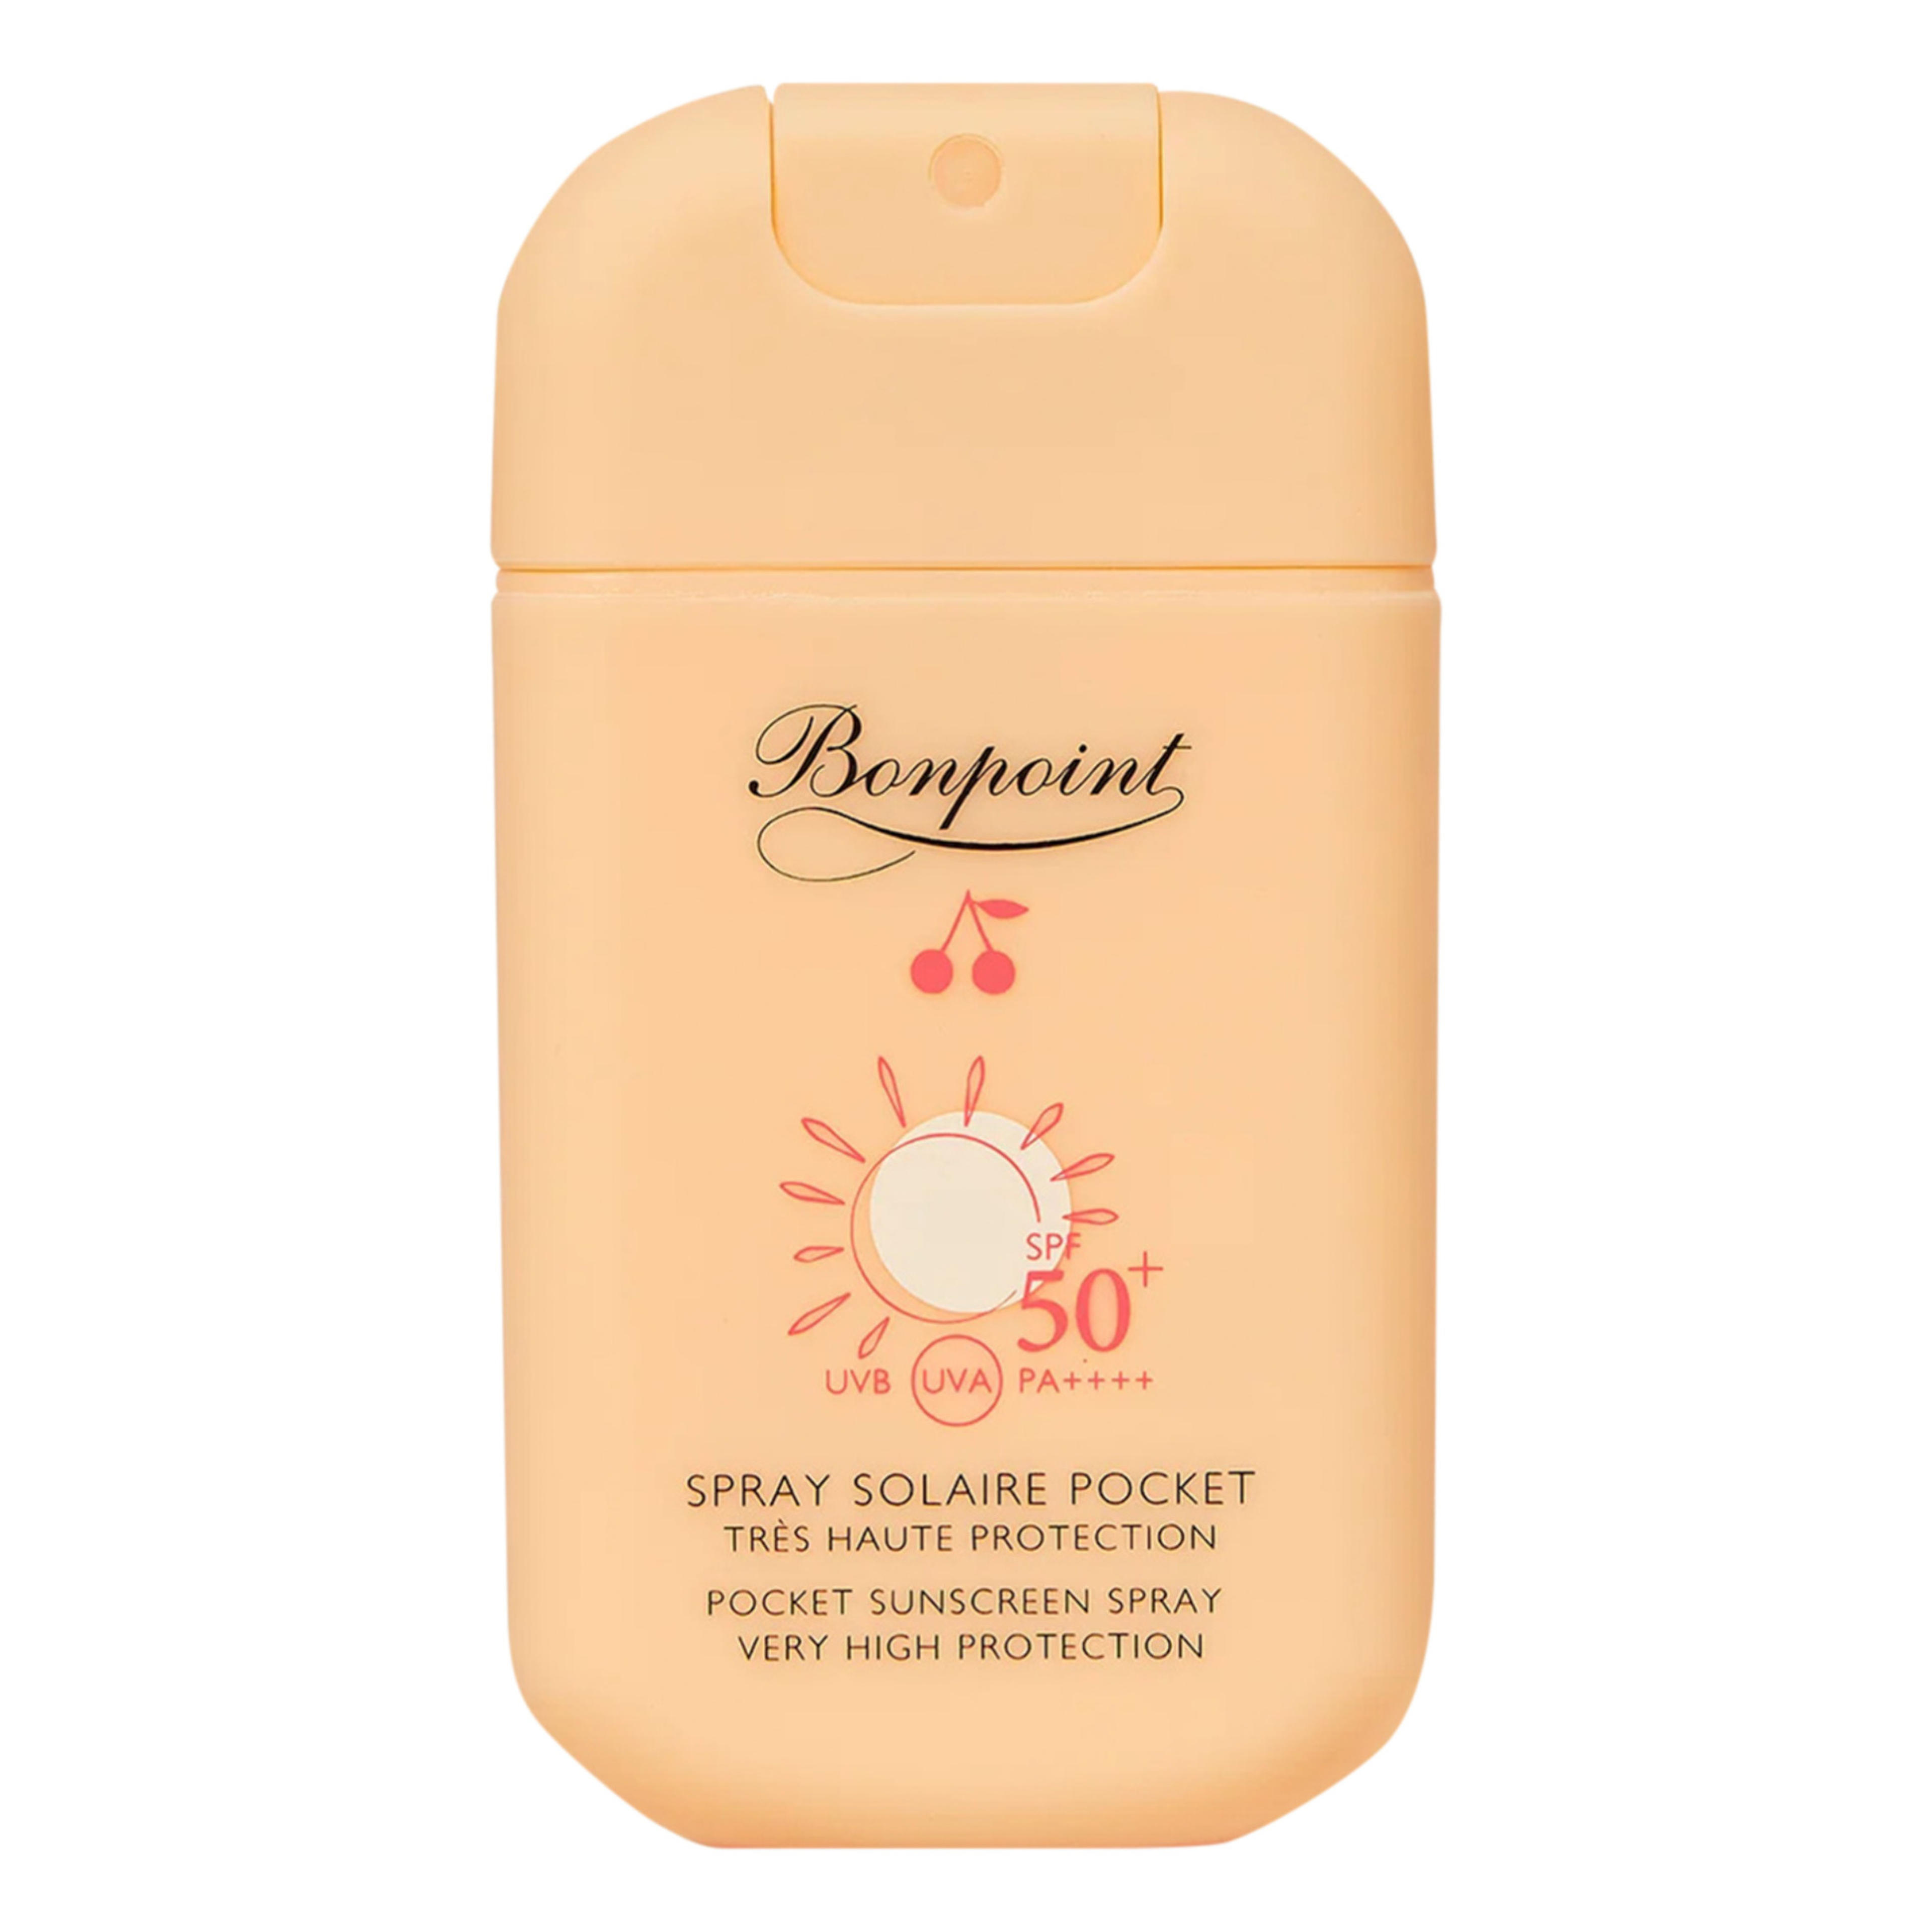 Bonpoint - Invisible Pocket Sun Spray SPF50 - 30 ml